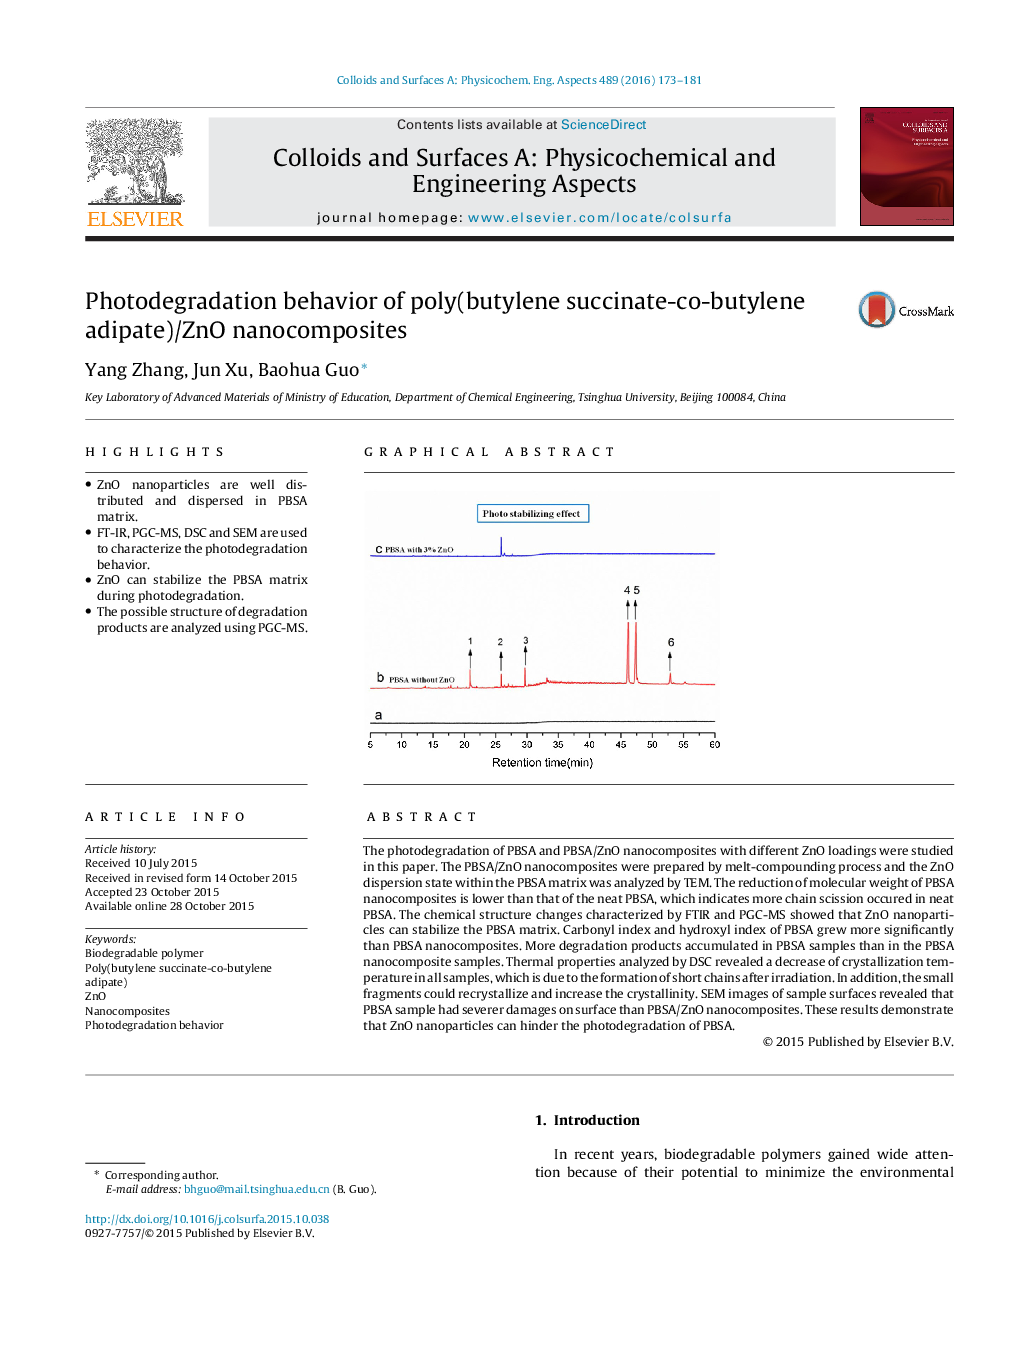 Photodegradation behavior of poly(butylene succinate-co-butylene adipate)/ZnO nanocomposites